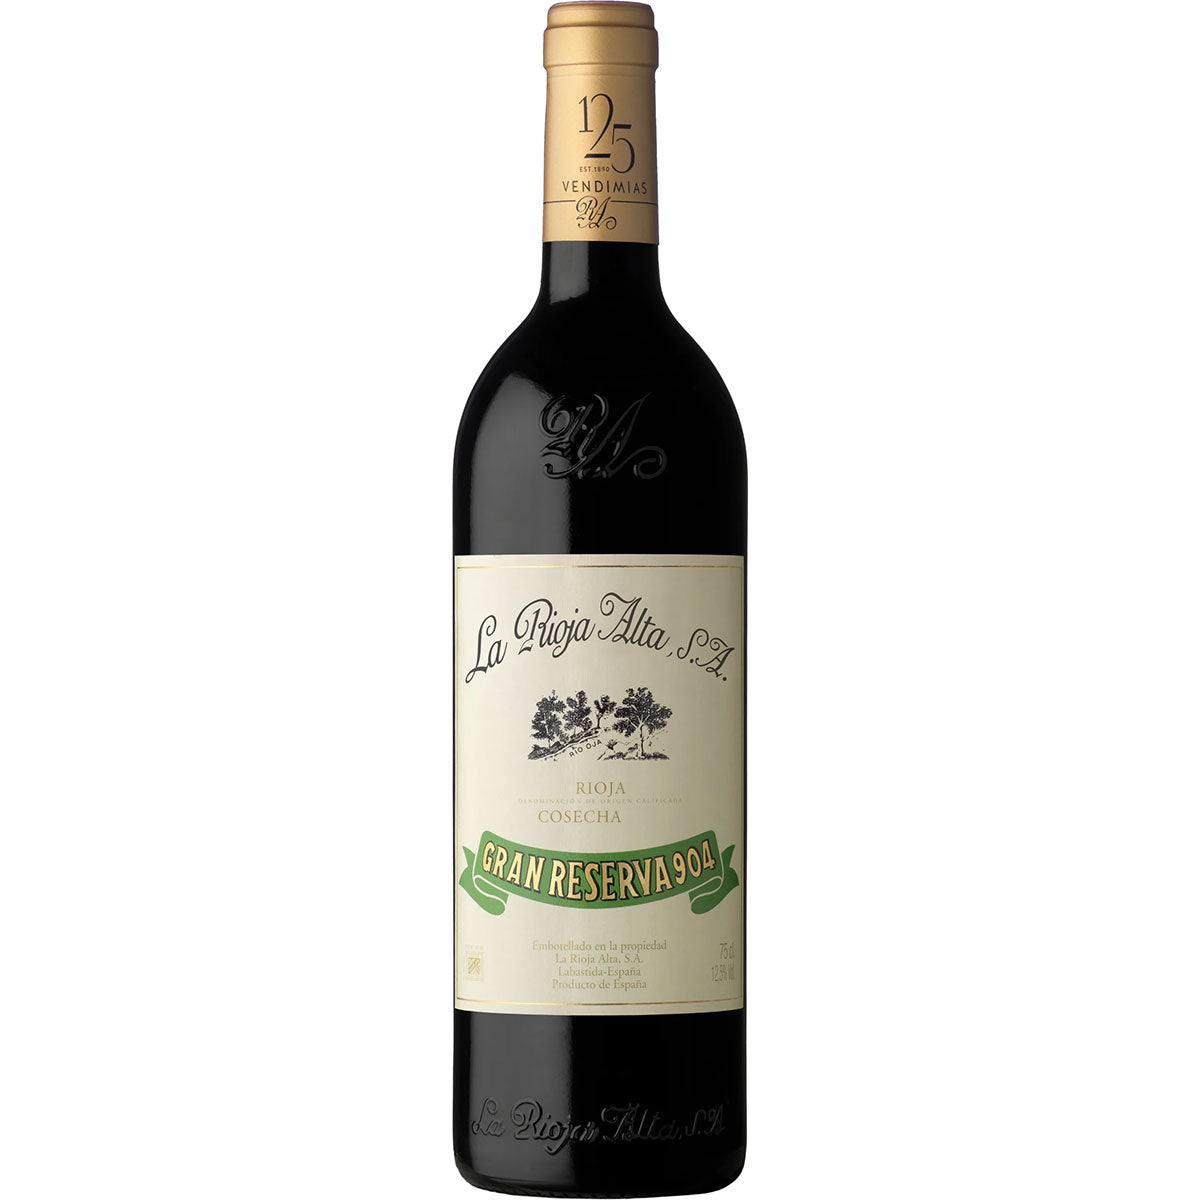 La Rioja Alta Gran Reserva 904 Seleccion Especial 2015 (150CL)